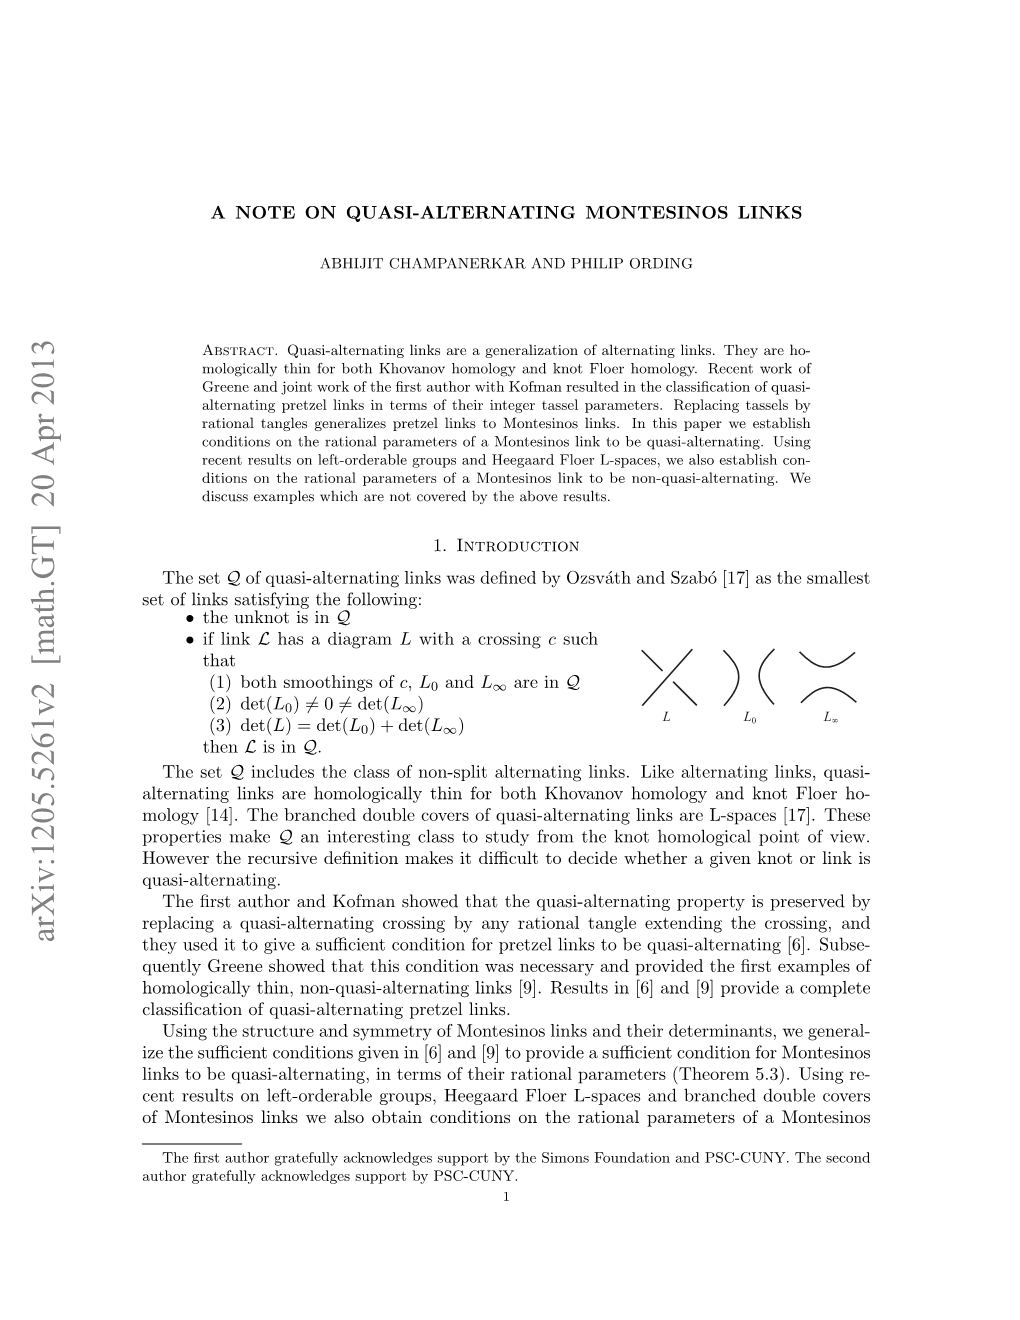 A Note on Quasi-Alternating Montesinos Links